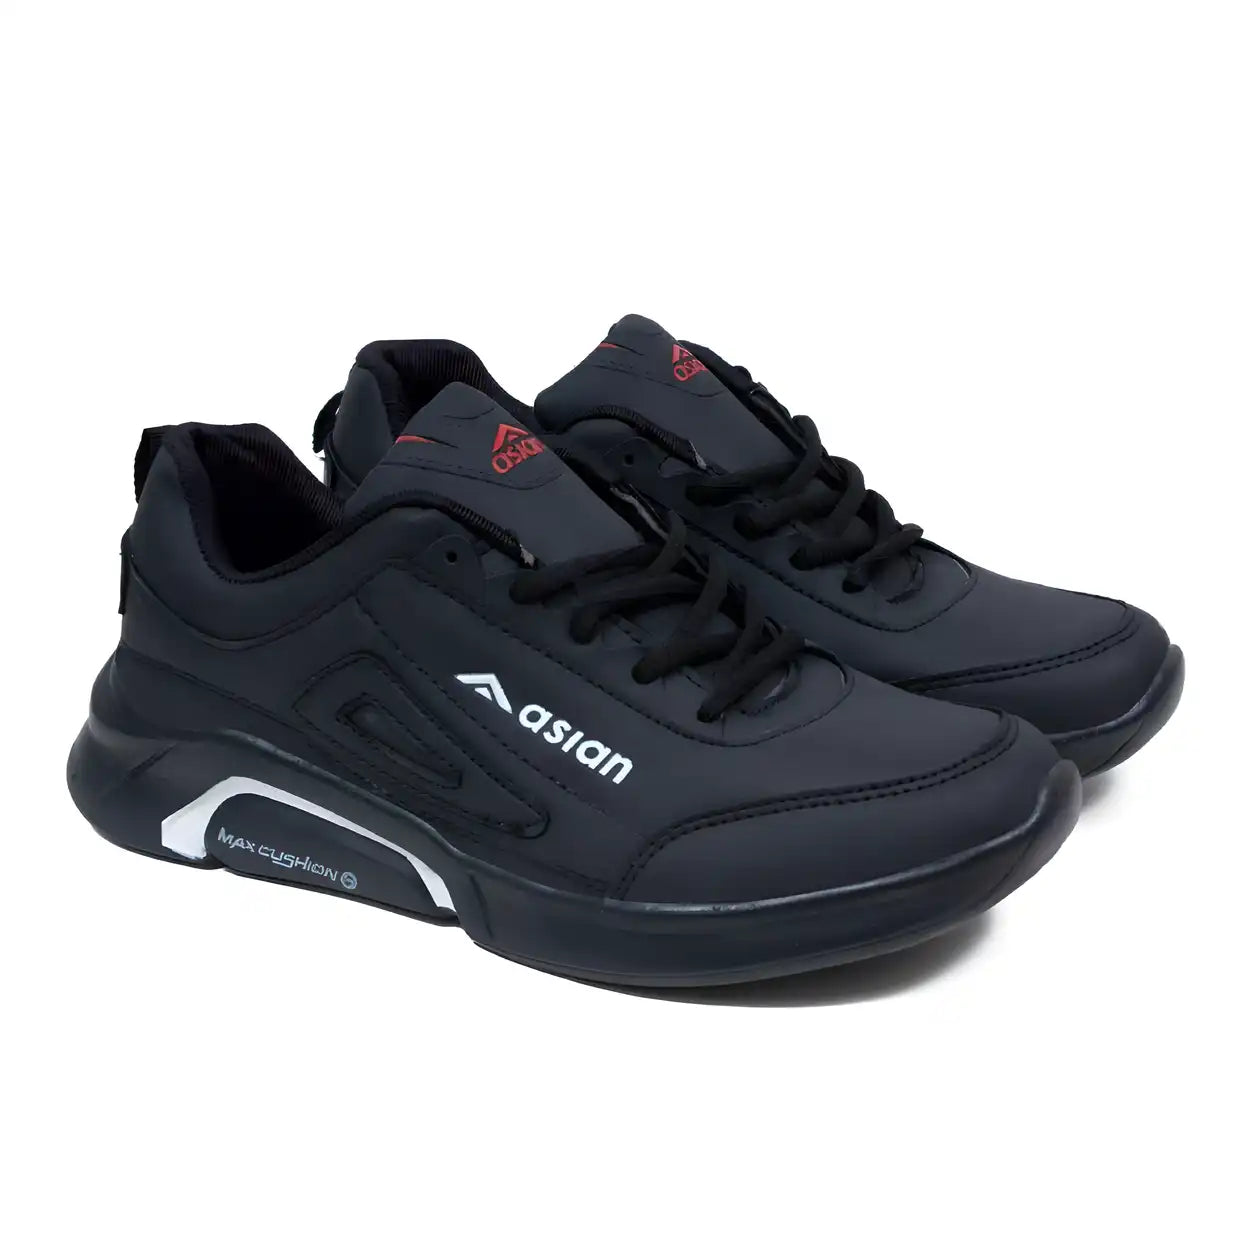 Asian Waterproof-05 Black Sports Shoes